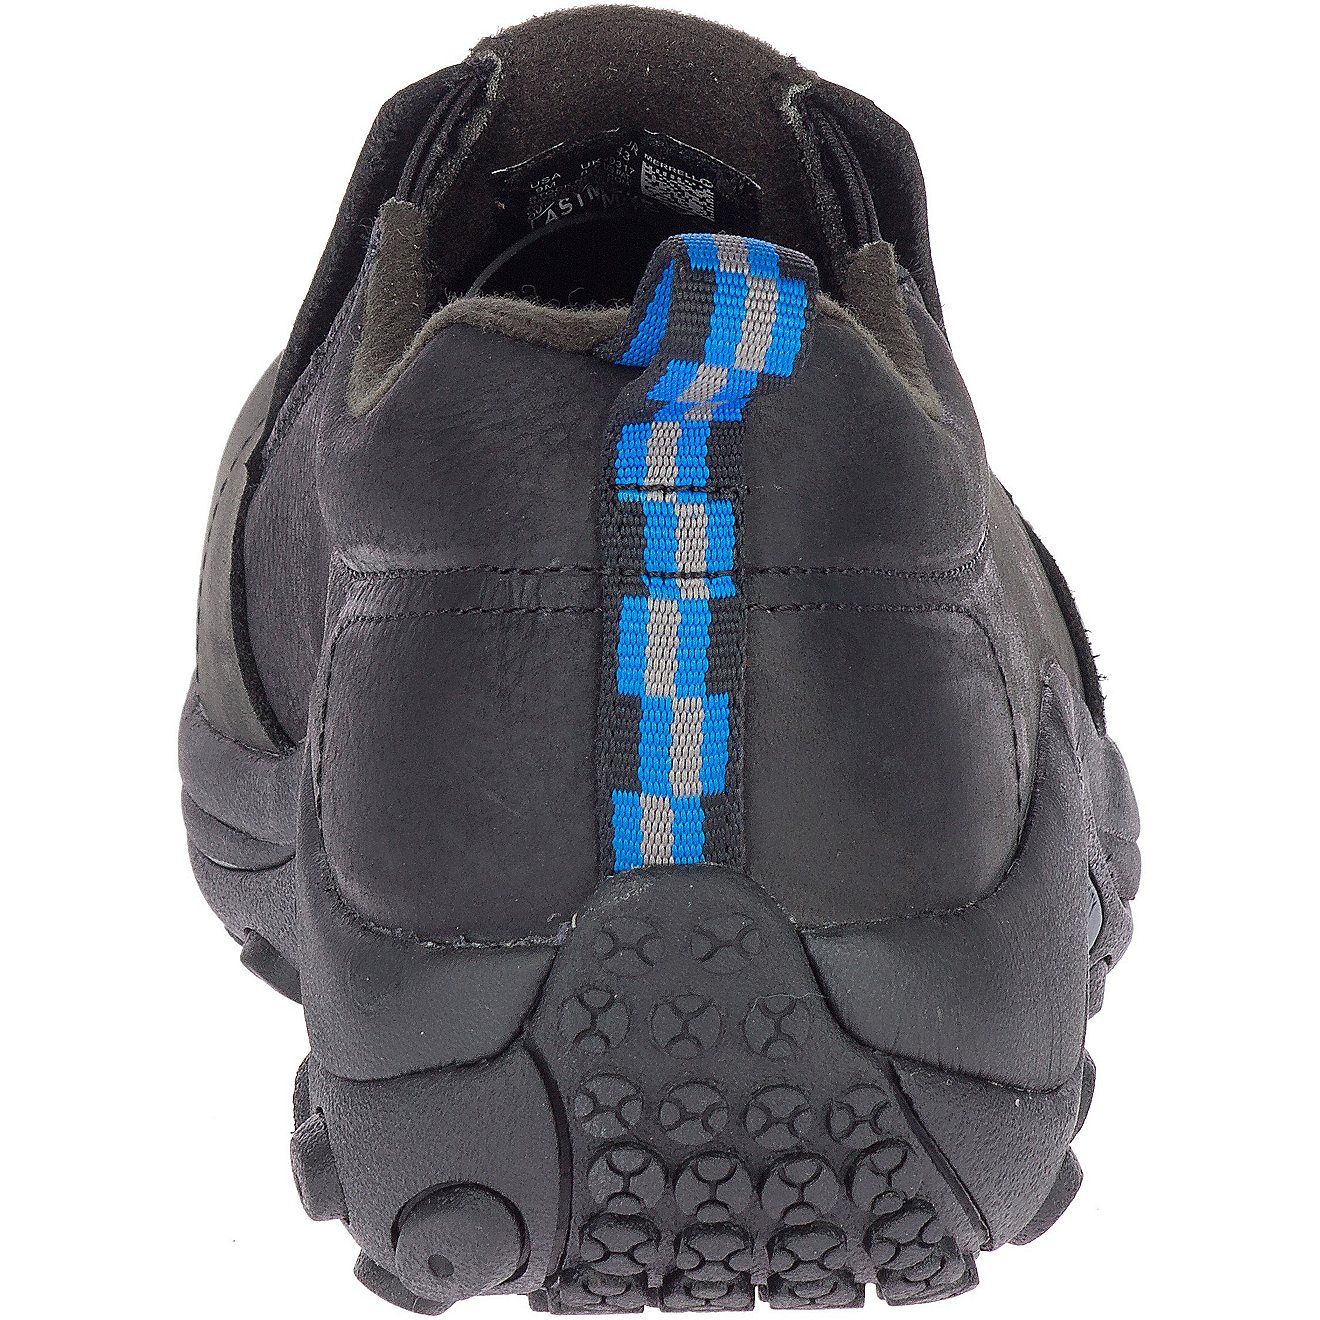 Merrell Men's Jungle Moc Composite Toe Work Shoes | Academy